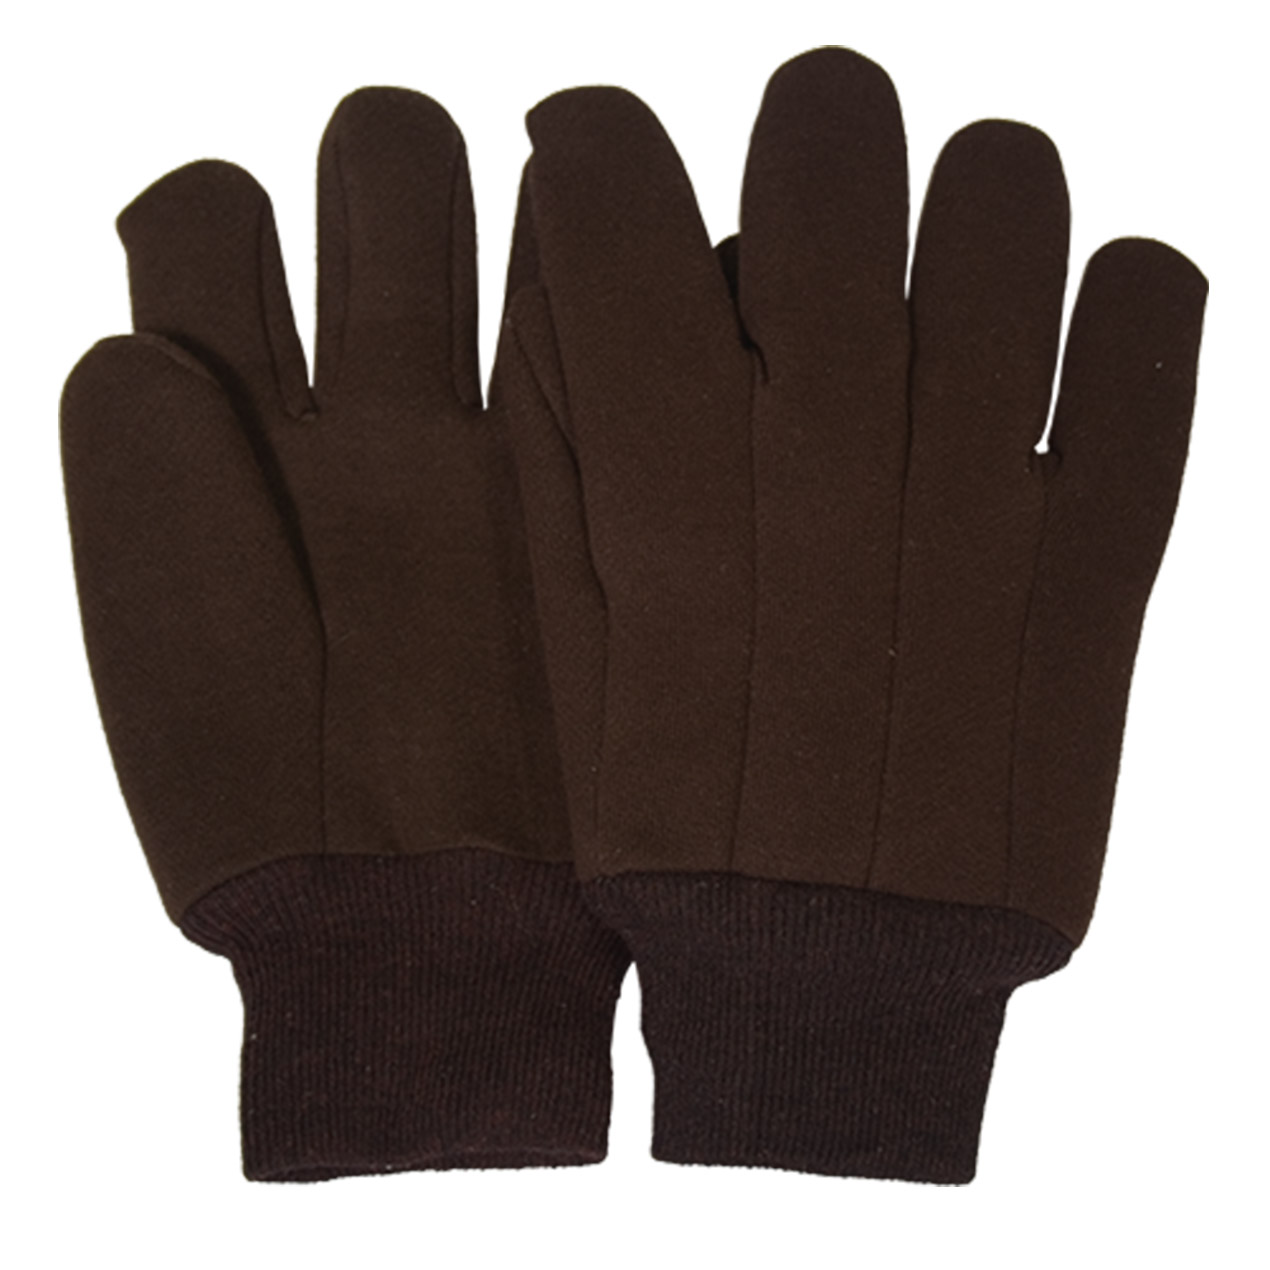 http://www.freezerwear.com/Shared/Images/Product/844-846-Insulated-Brown-Jersey-Gloves-Dozen/Samco_gloves_844-846.jpg